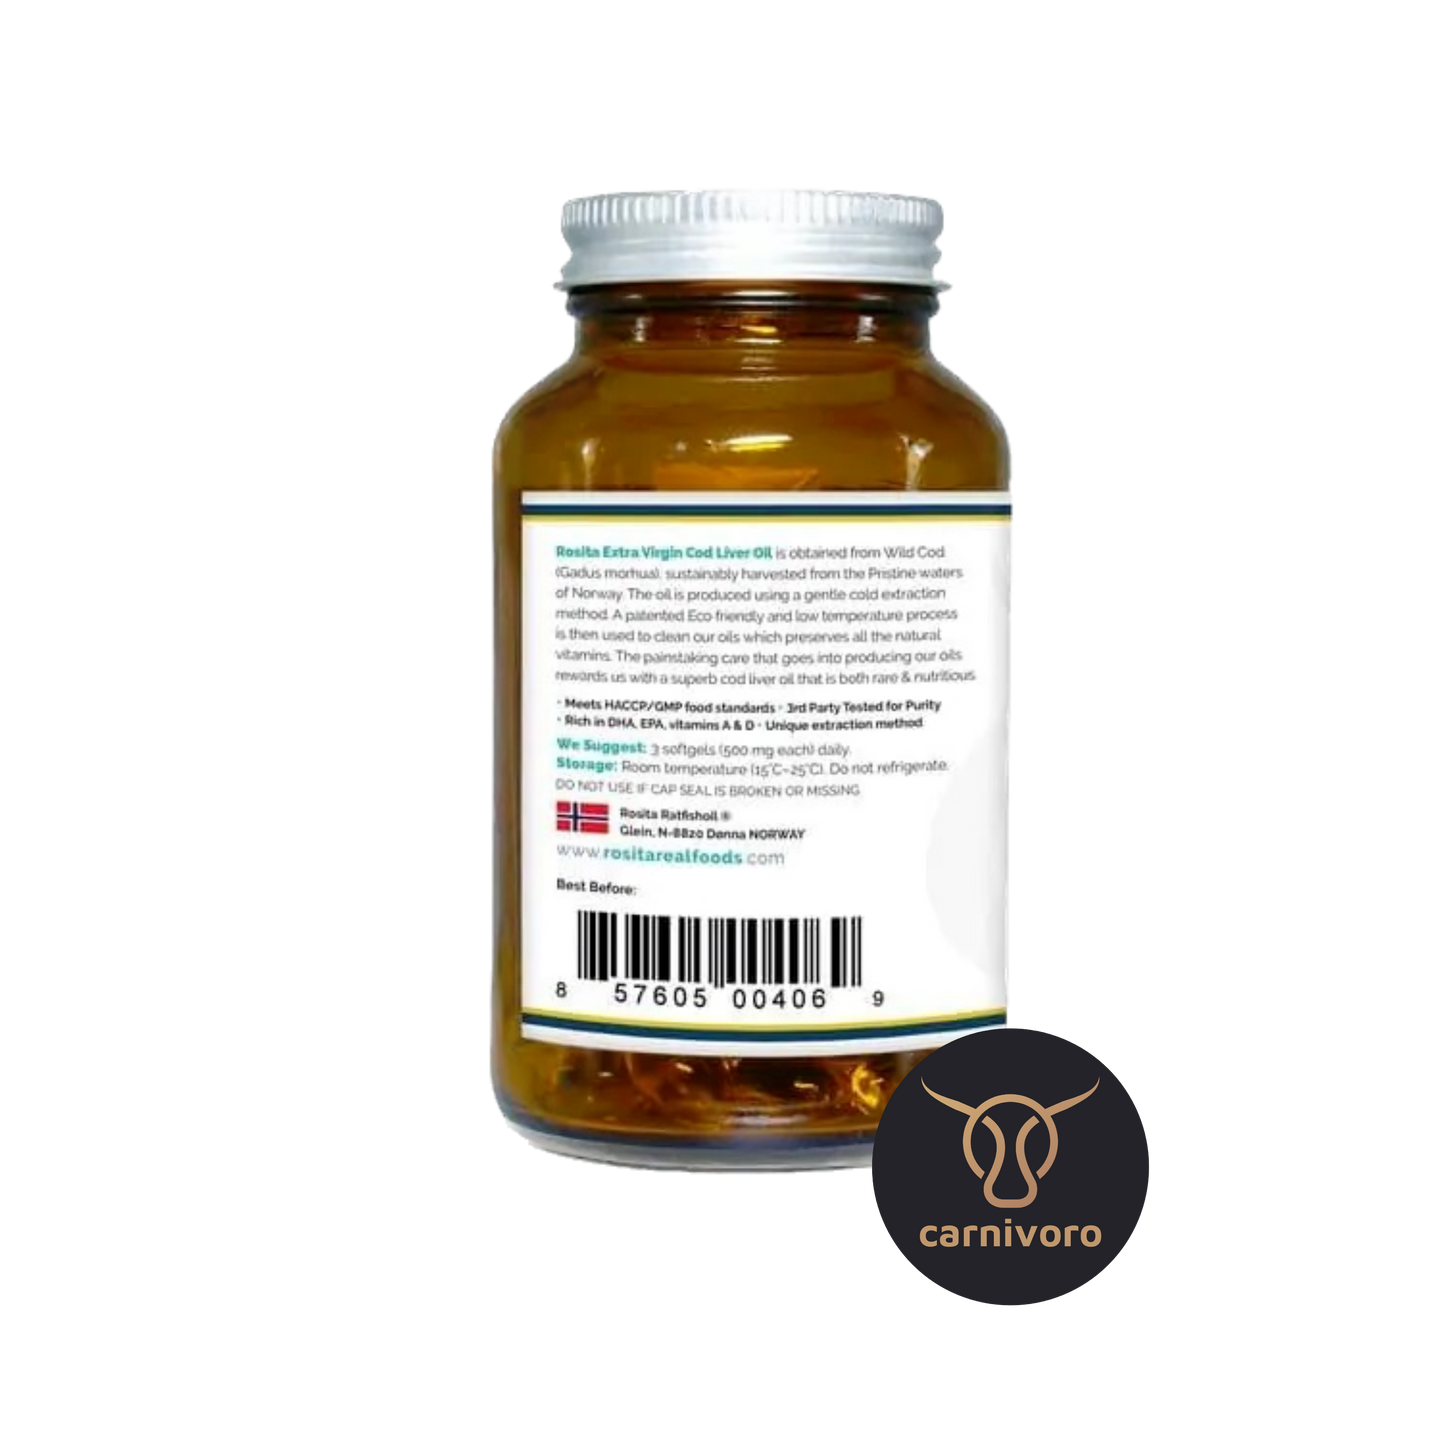 Rosita » Cod Liver Oil» cod liver oil 90 capsules